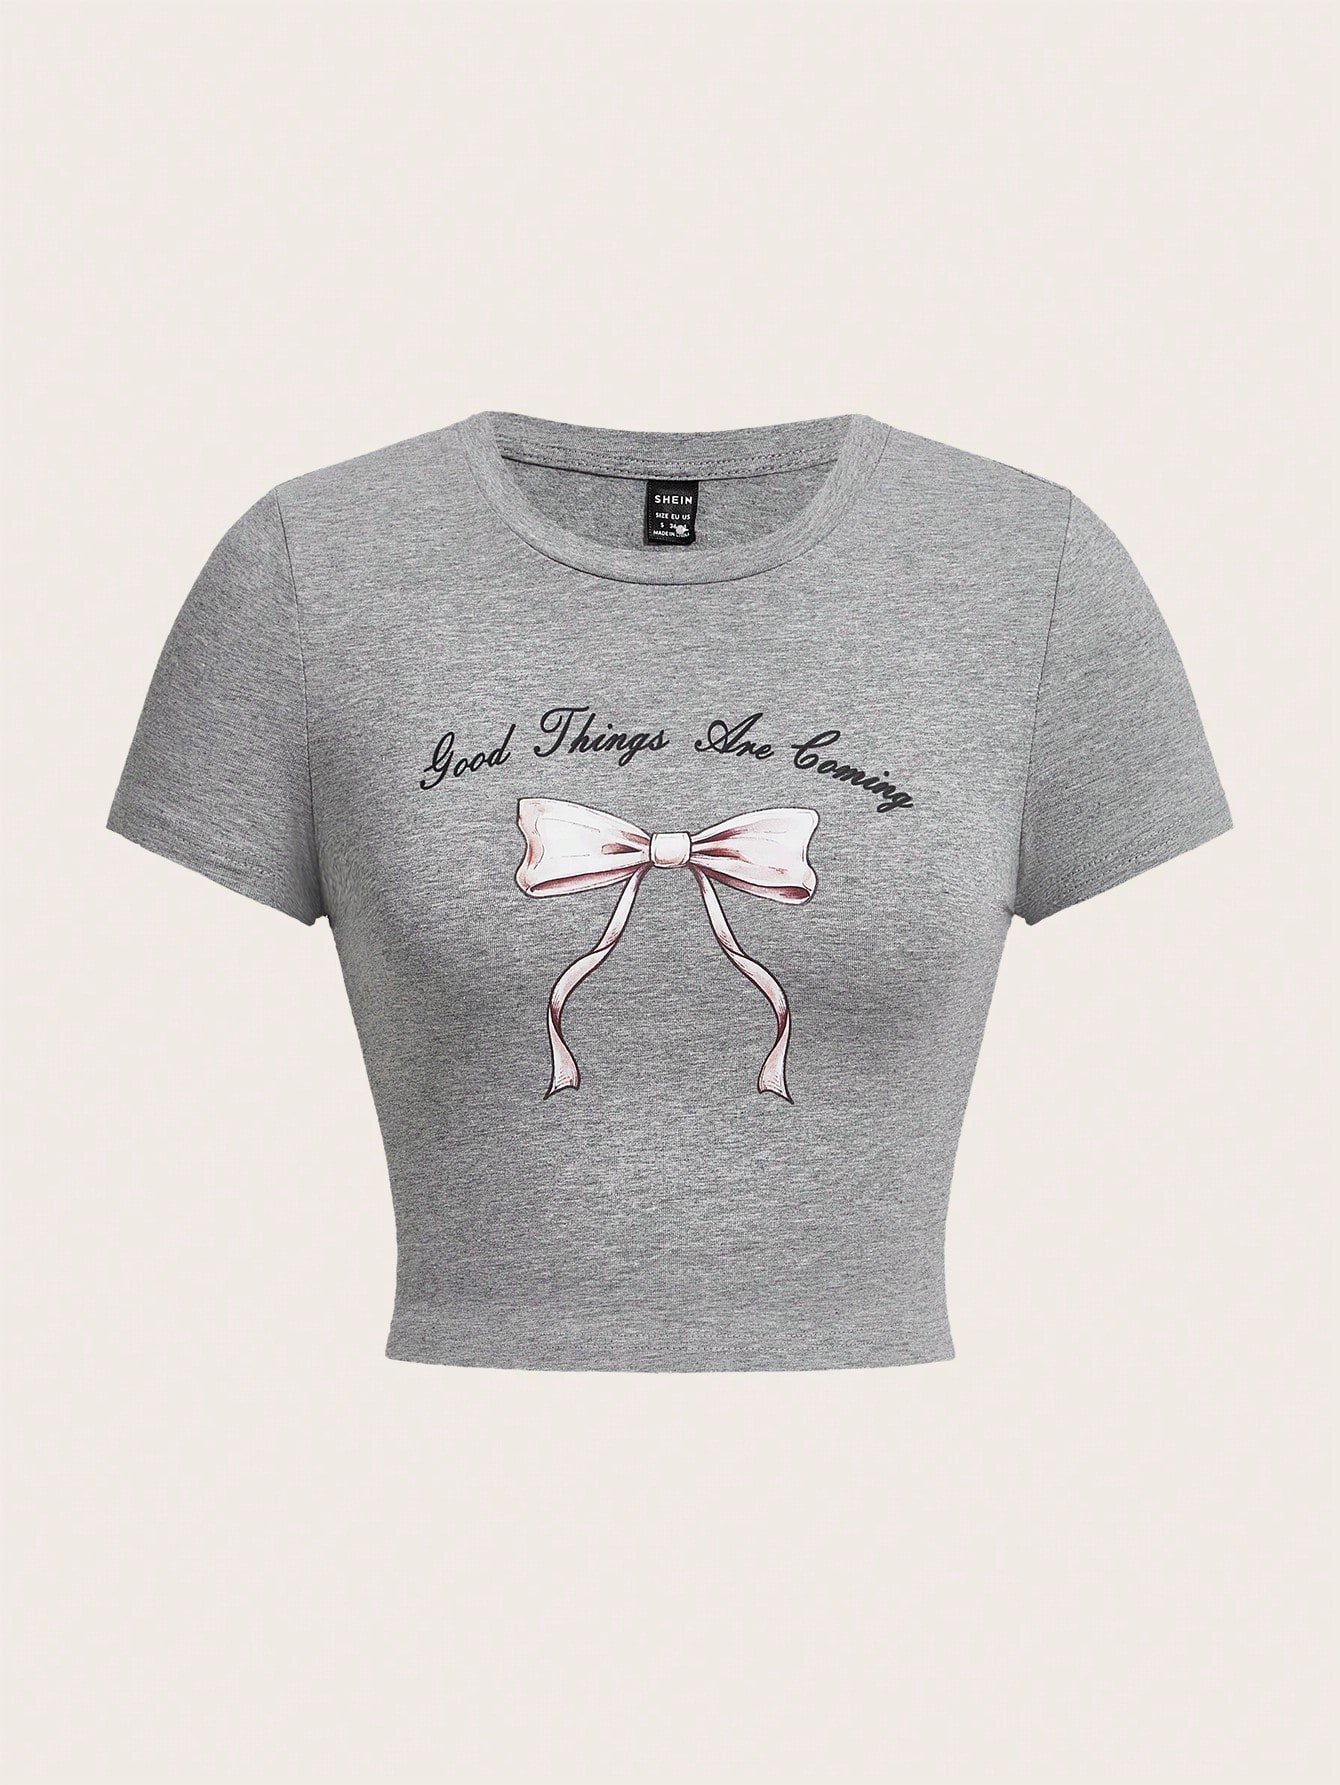 SHEIN Neu バレエ系tシャツ 白色 クールな可愛さ ピンクのリボンプリント 無地 カジュアル